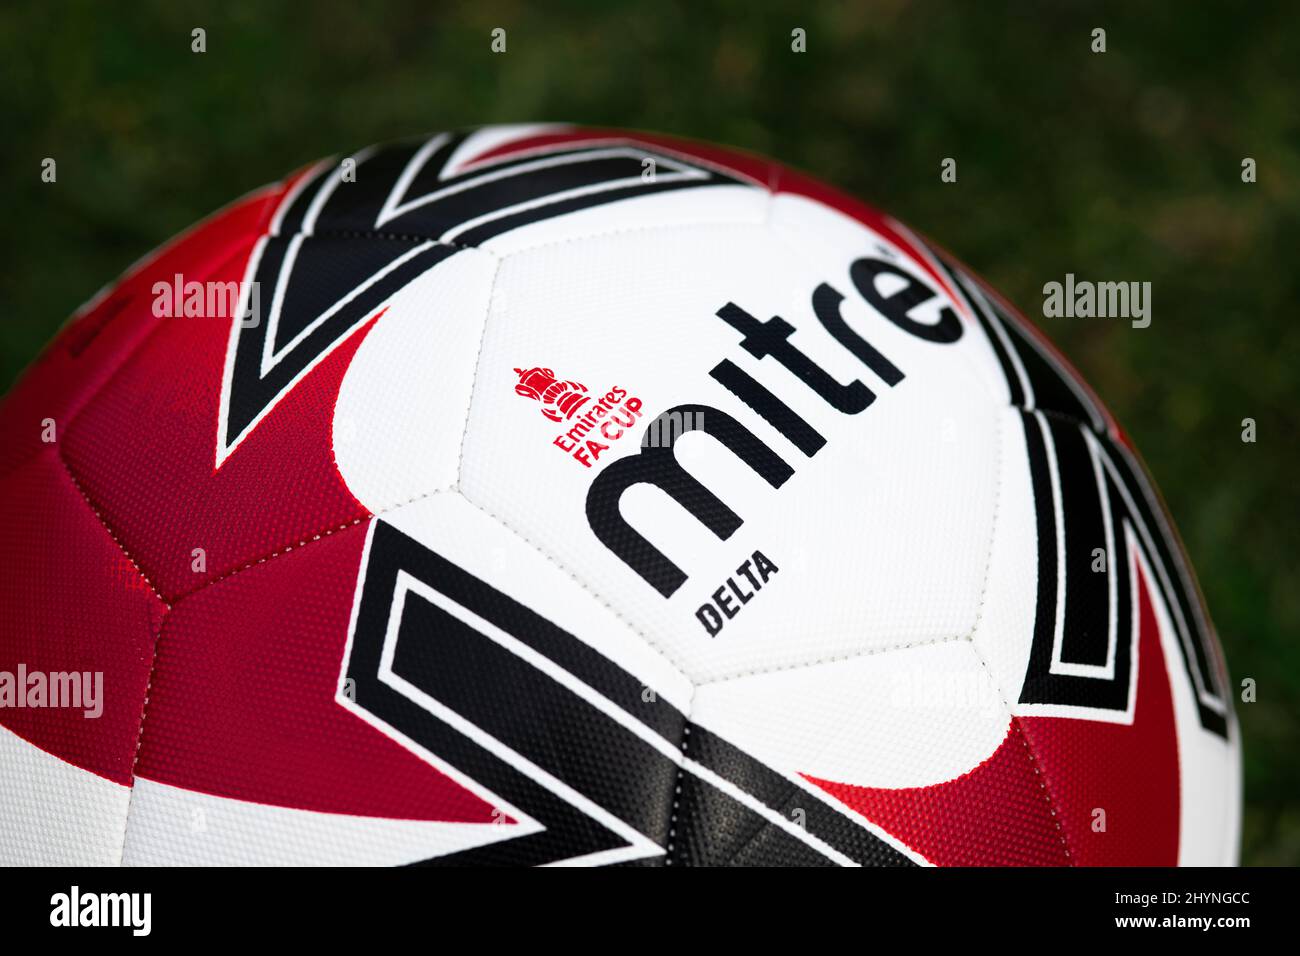 Mitre Delta Max. Official Emirates FA Cup Football. Stock Photo